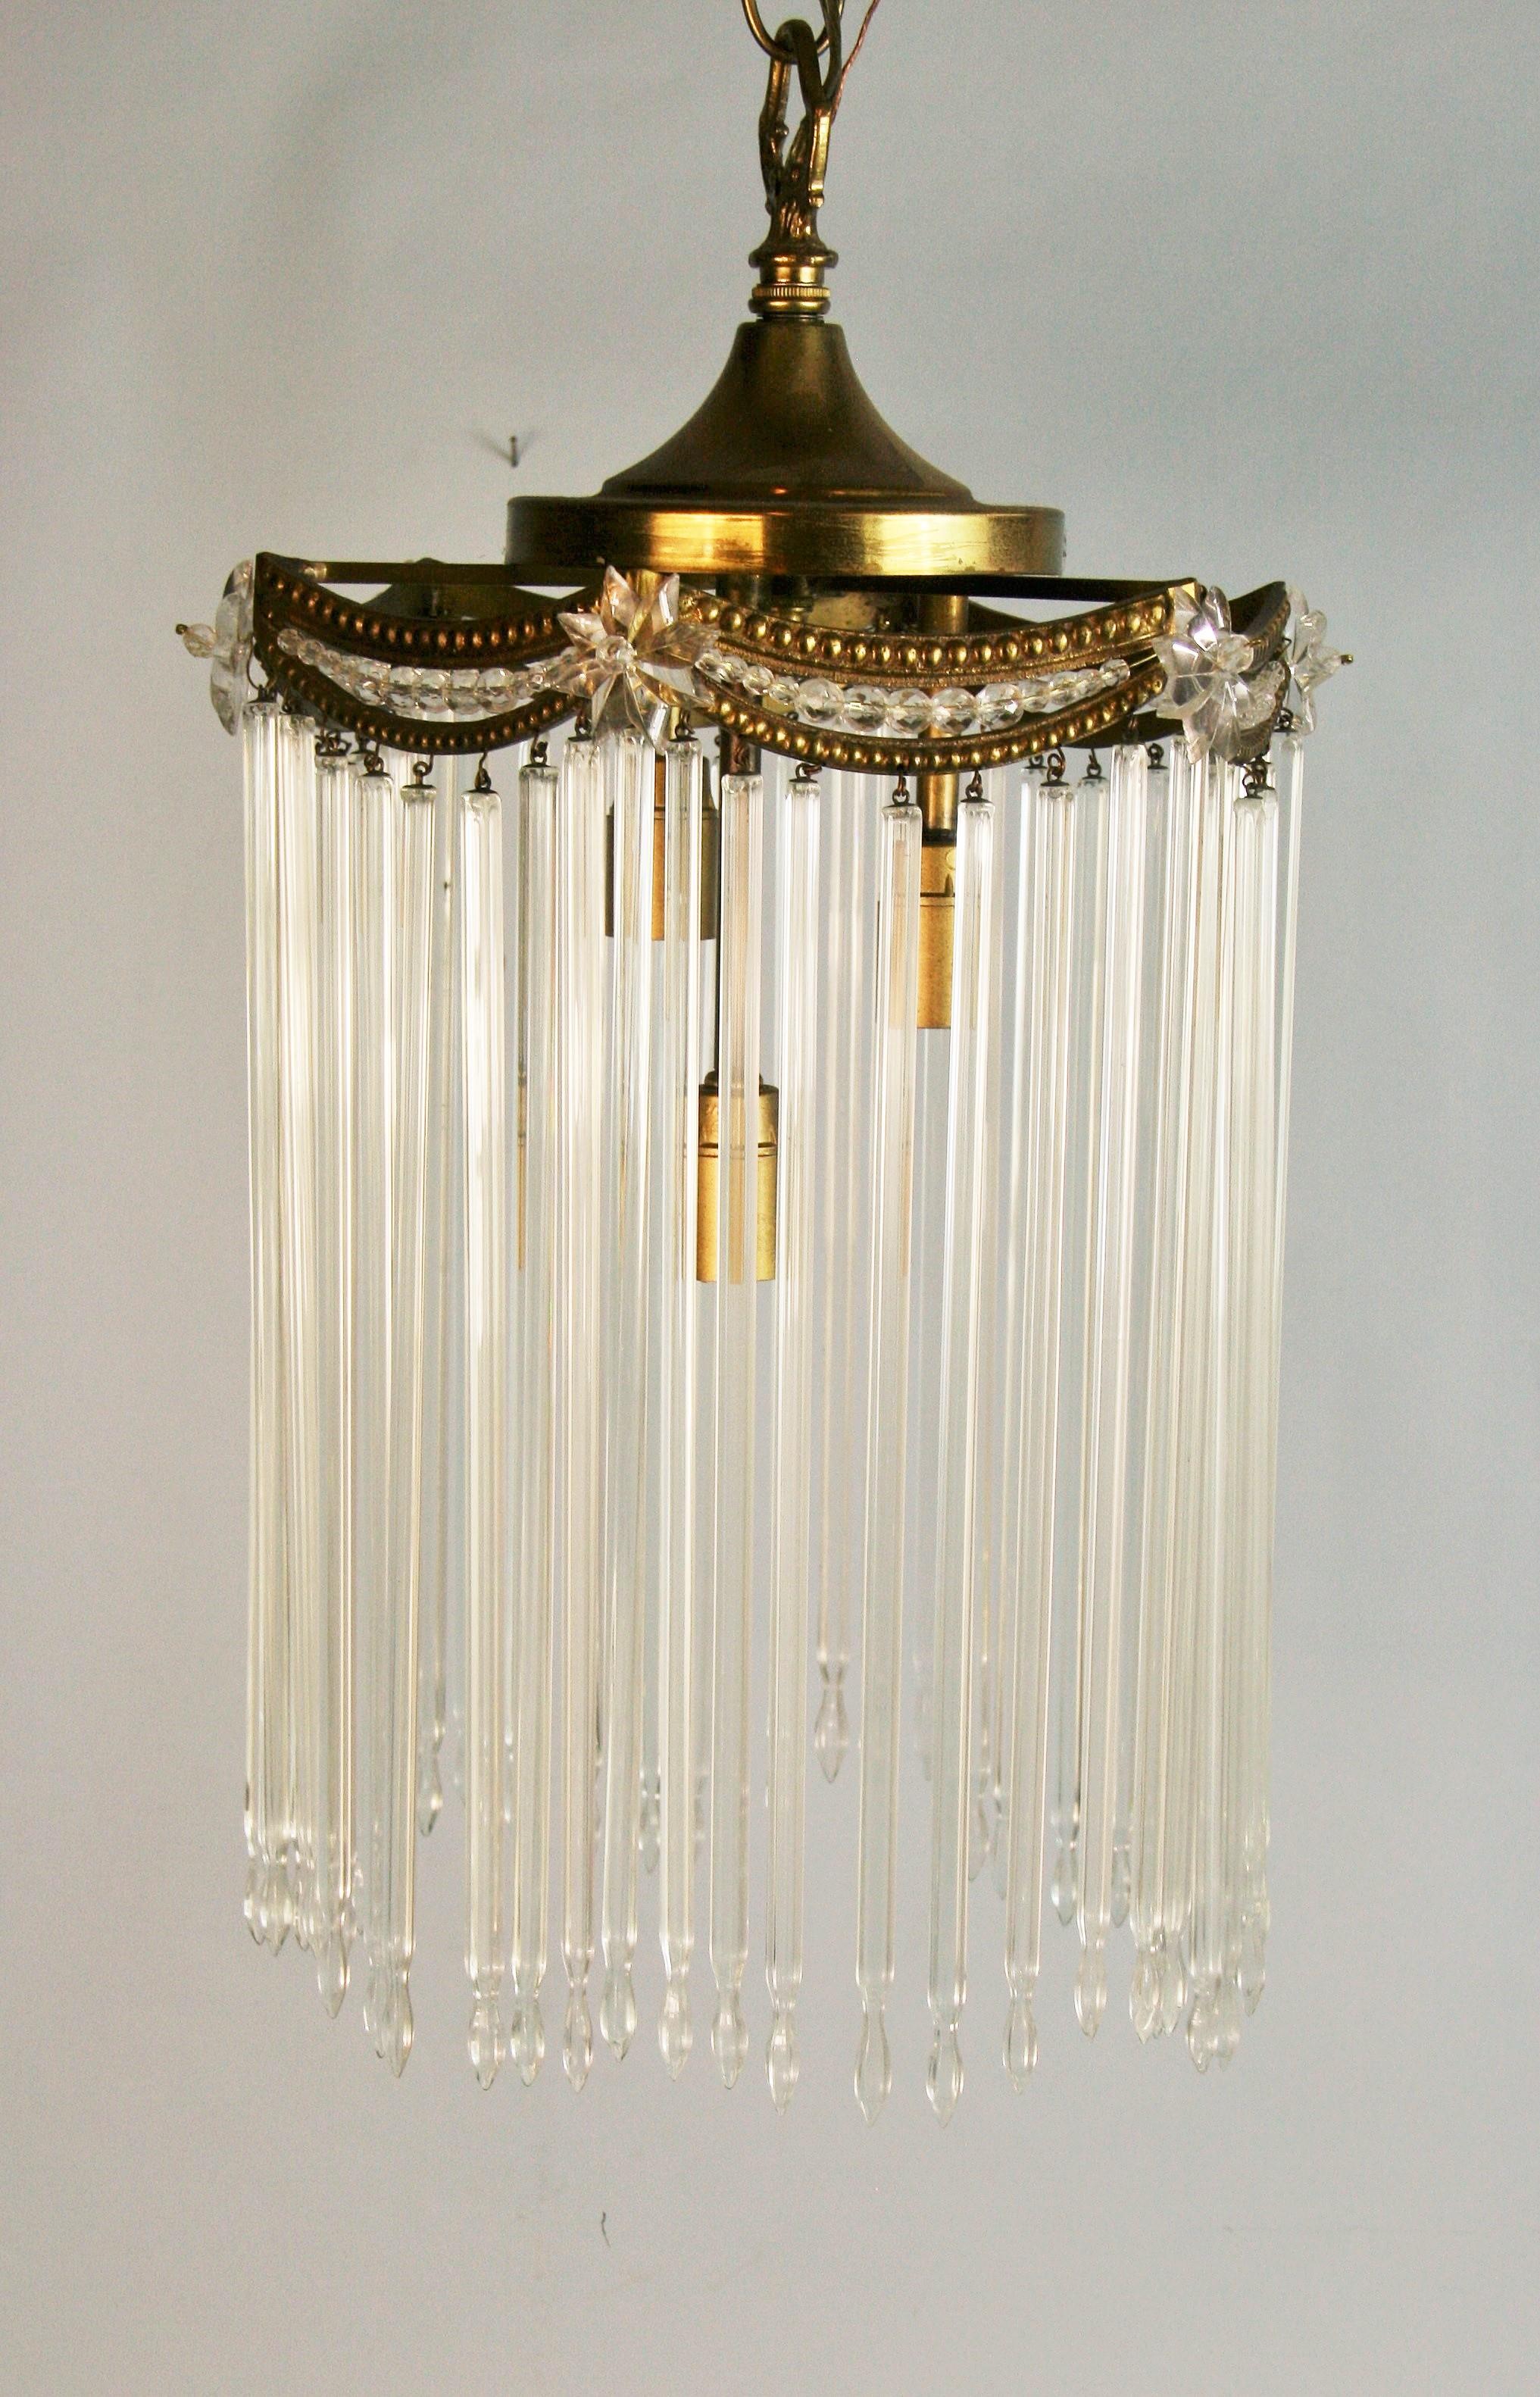 1612 Antique  three internal light Austrian crystal pendant.
Takes 3 40 watt candelabra based bulbs
Rewired.